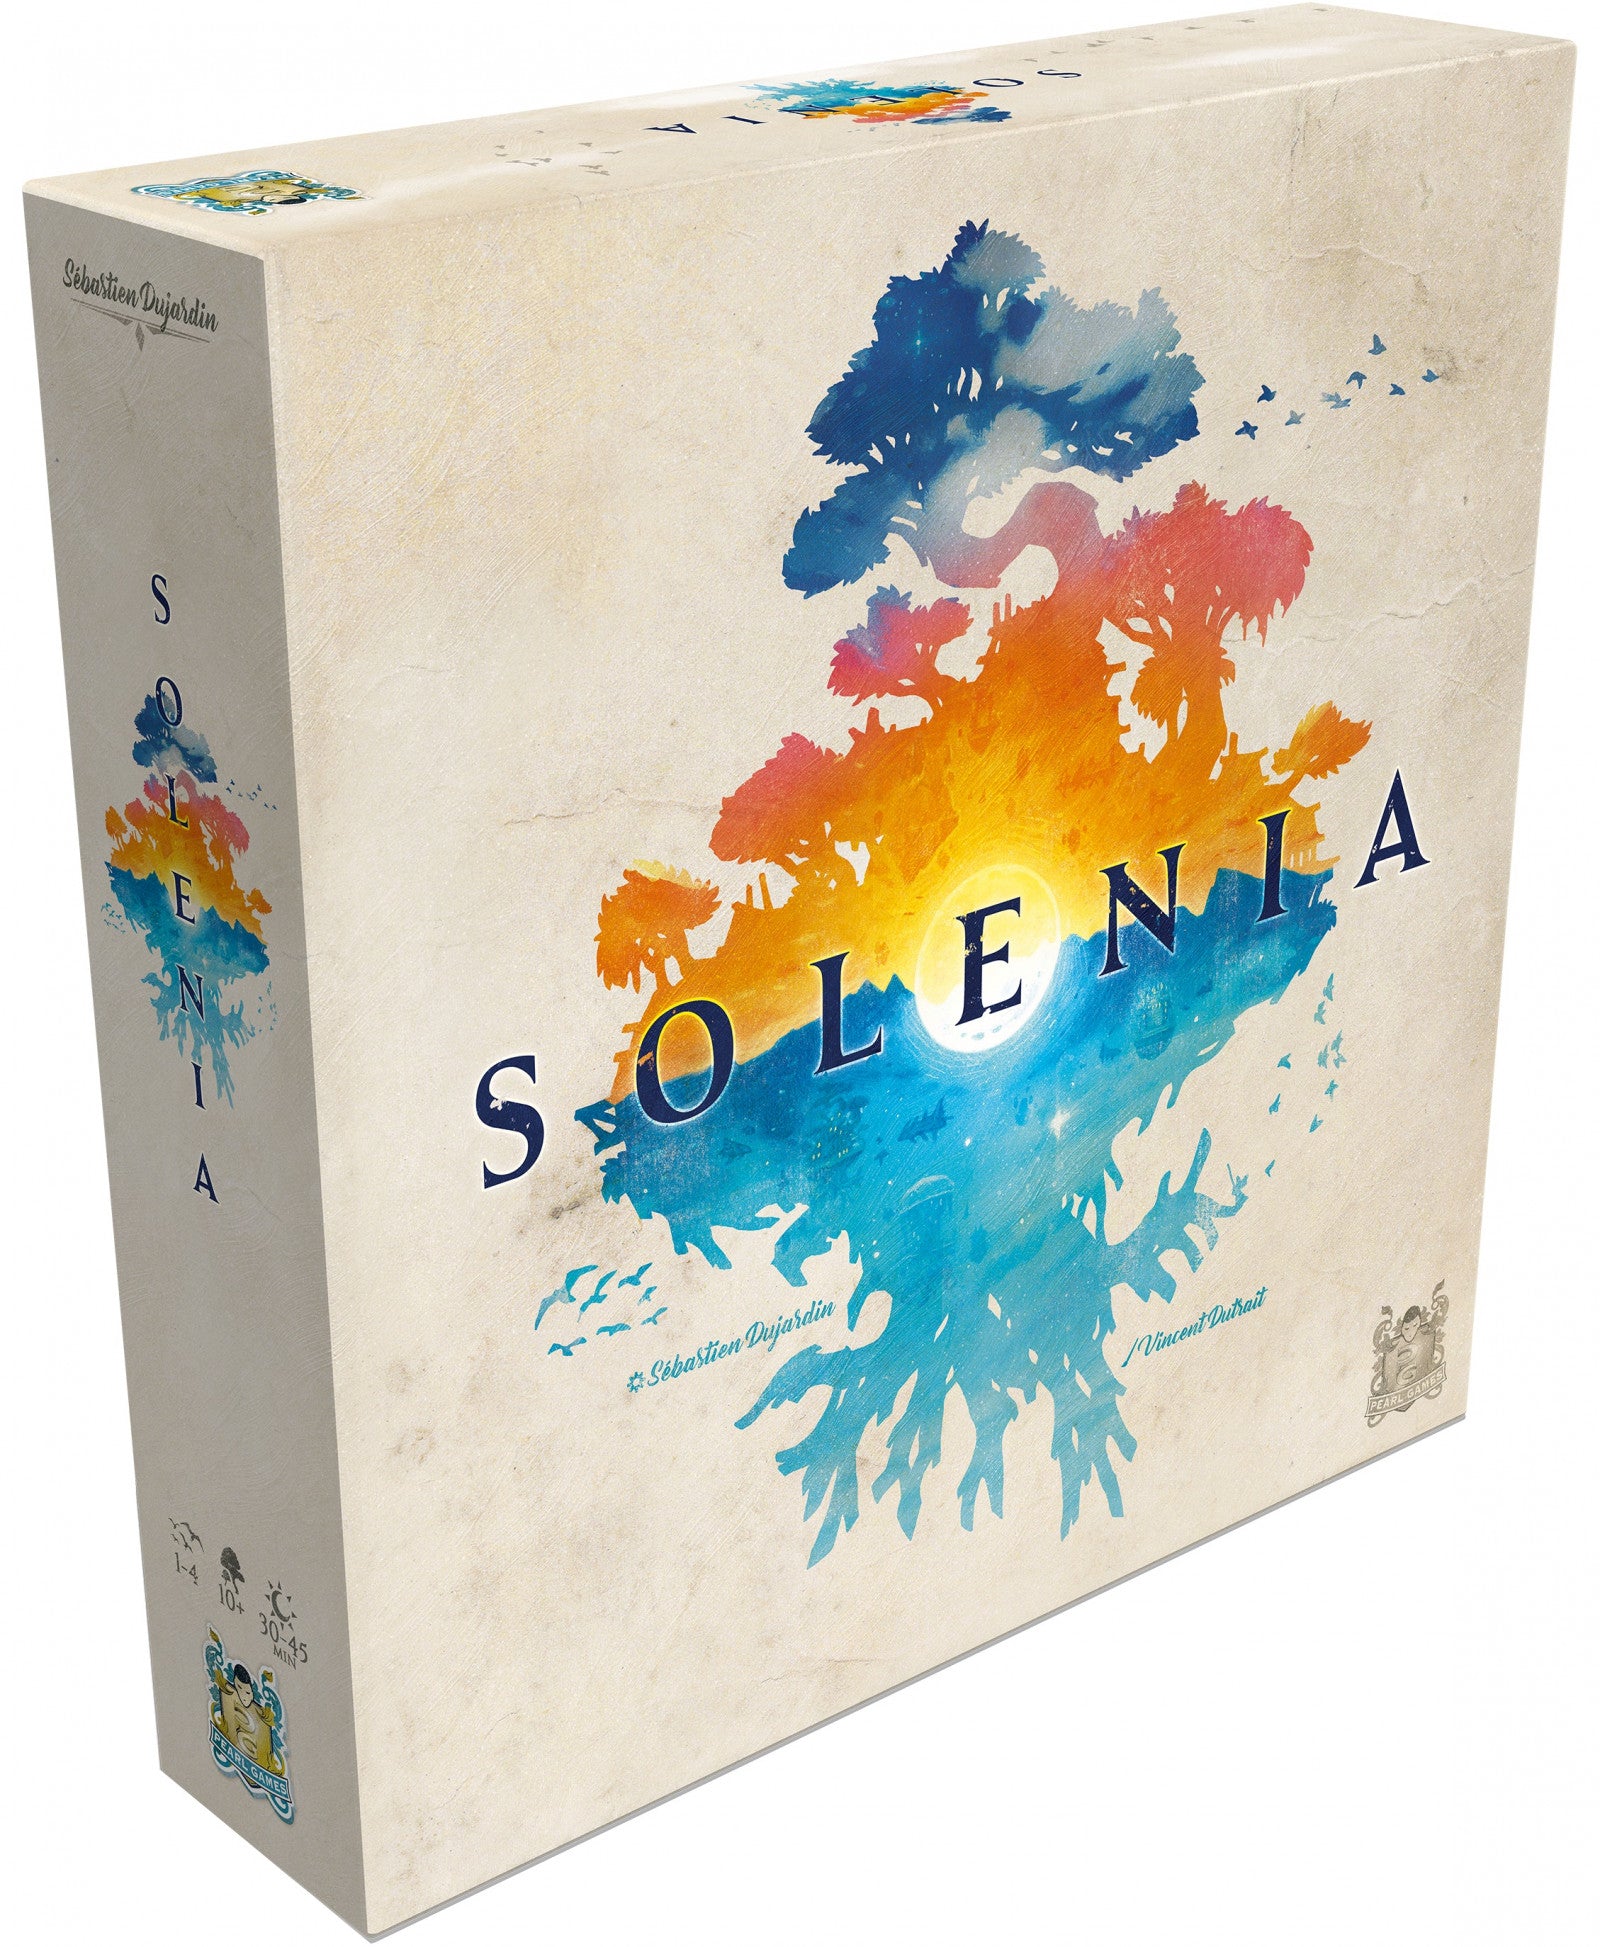 Solenia | Tabernacle Games